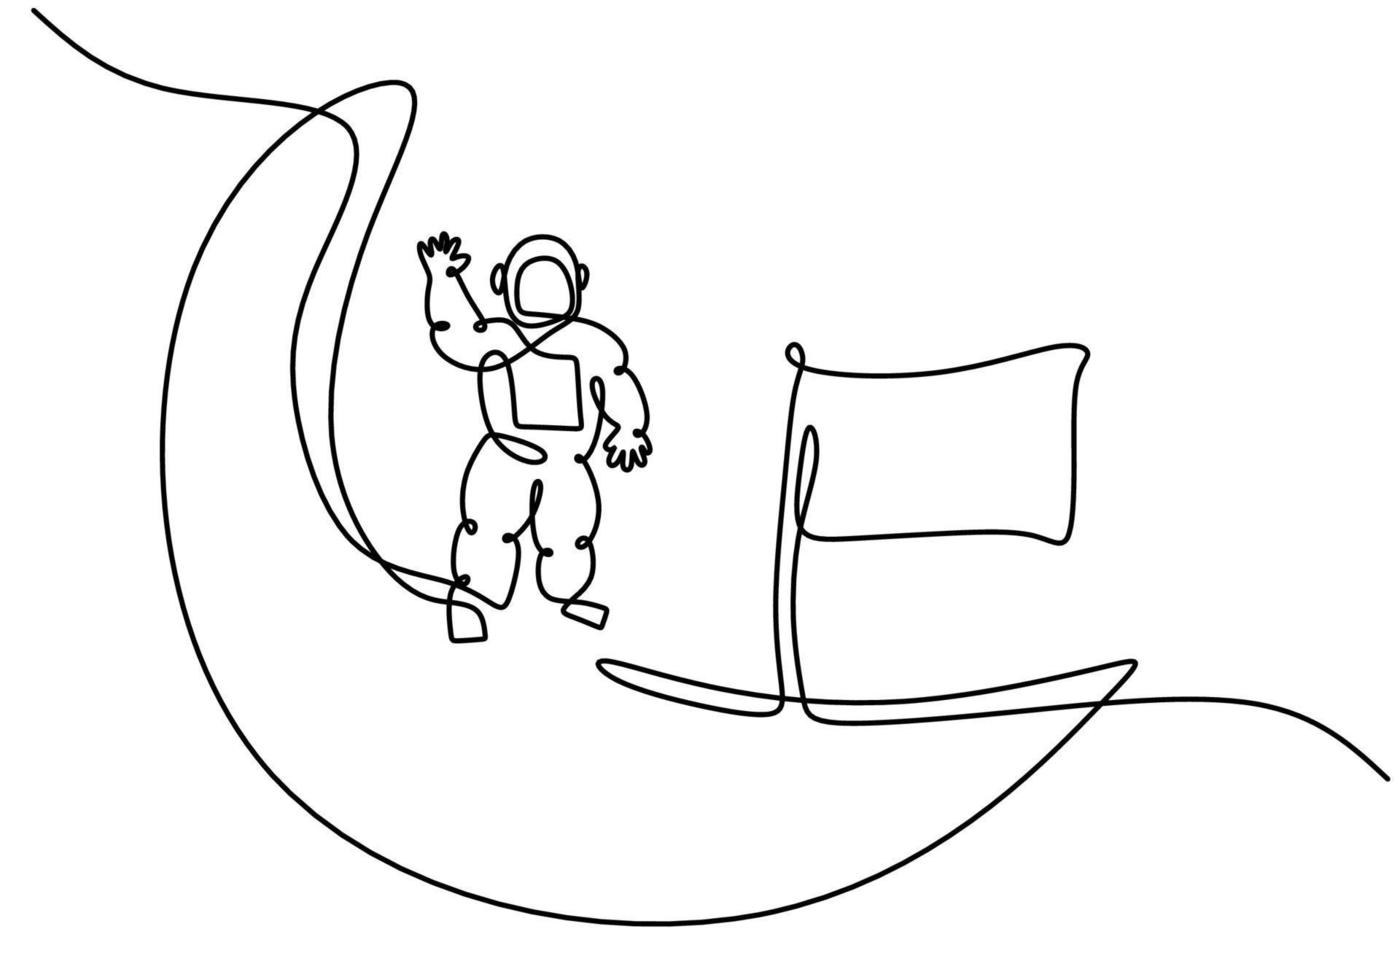 hand teckning ett enda kontinuerlig linje av astronaut på måne vektor